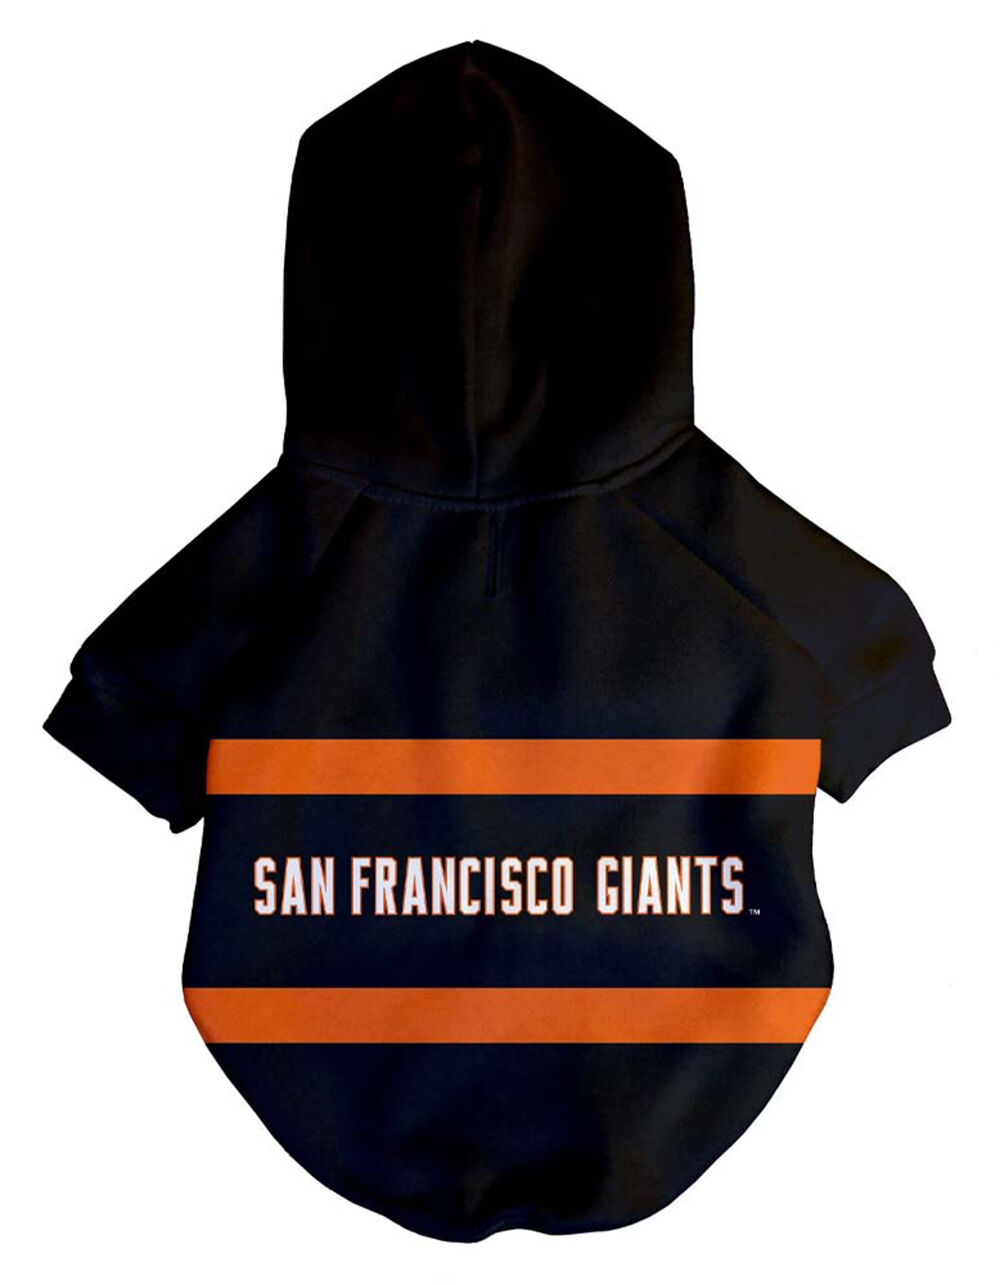 Fresh Pawz San Francisco Giants Hoodie | Dog Clothing - Black - L